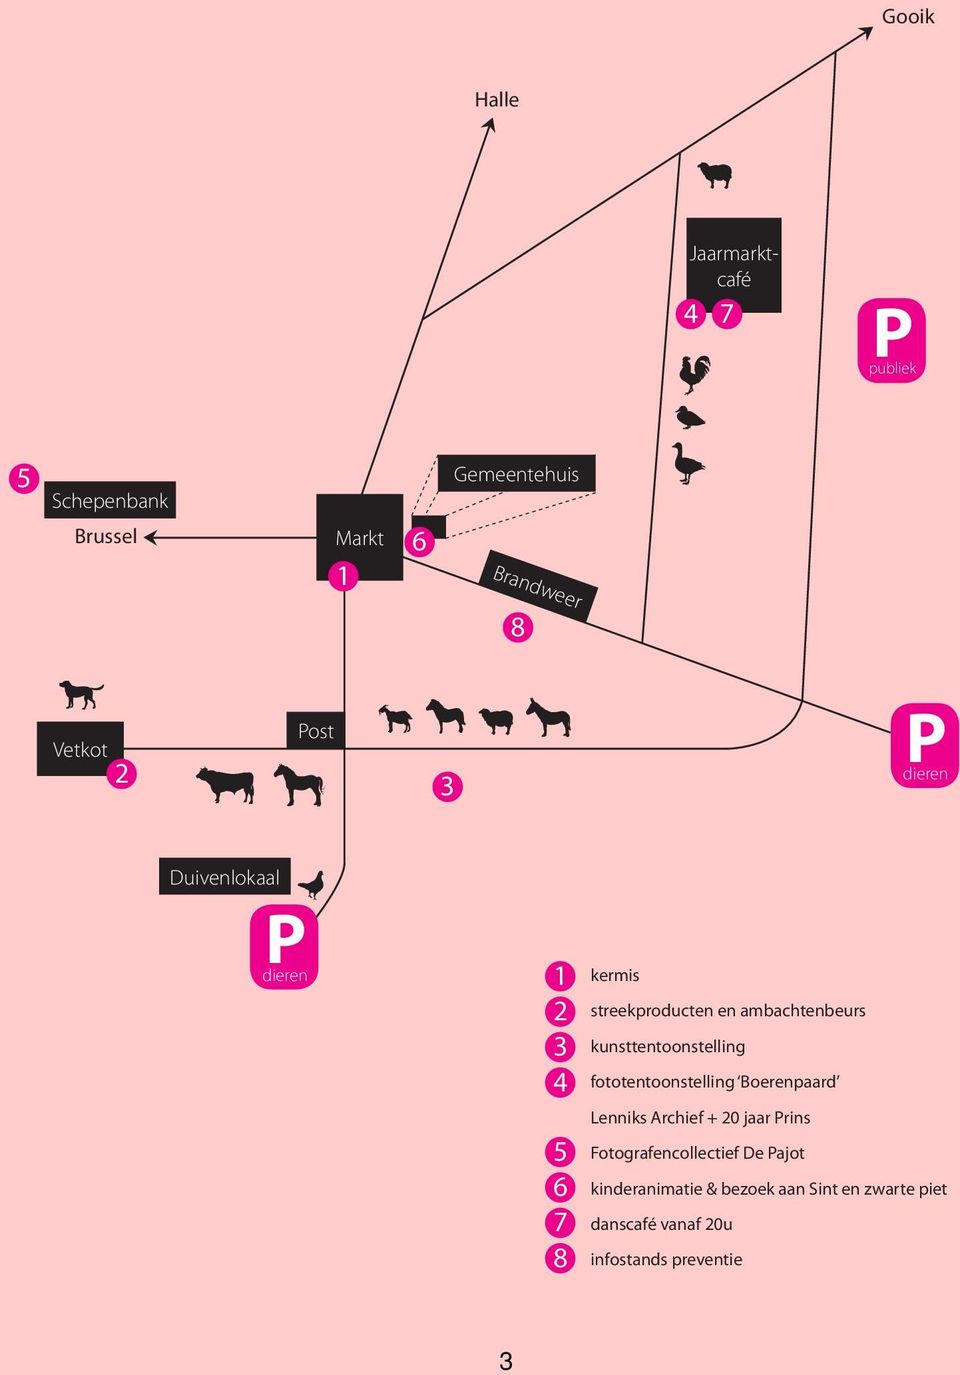 ambachtenbeurs kunsttentoonstelling fototentoonstelling Boerenpaard Lenniks Archief + 20 jaar Prins